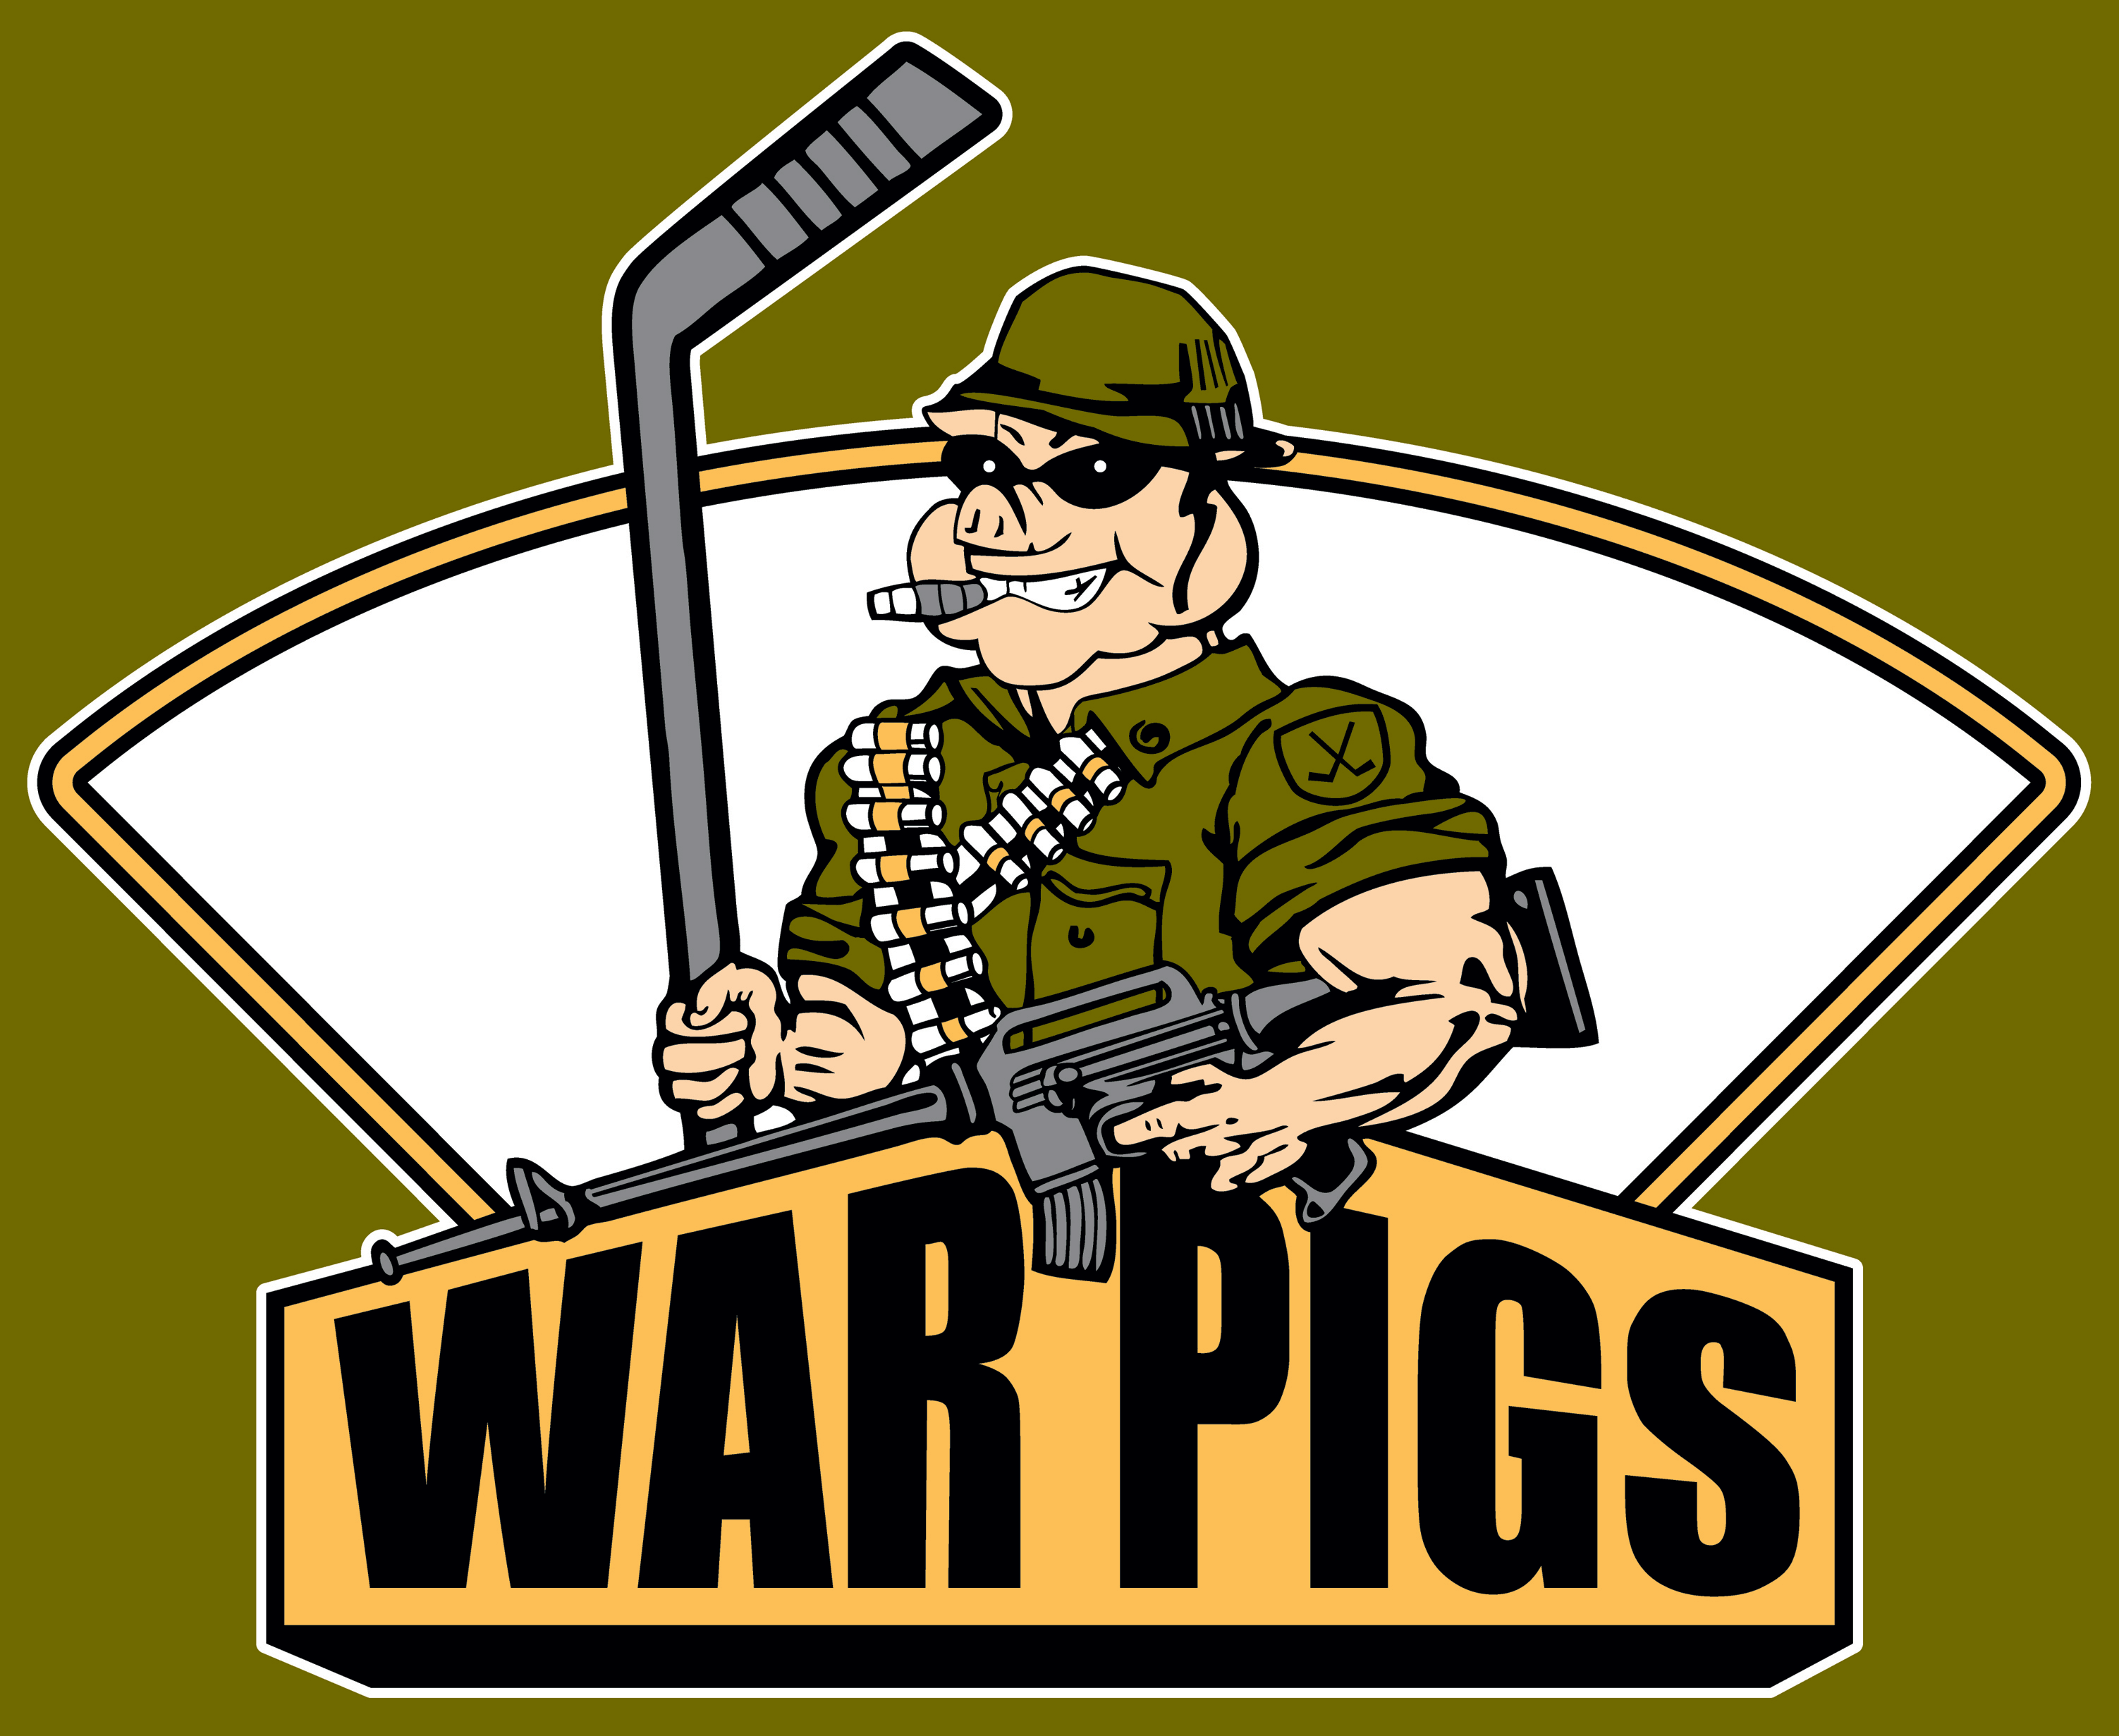 Funny Hockey Logo - War Pigs Web Site